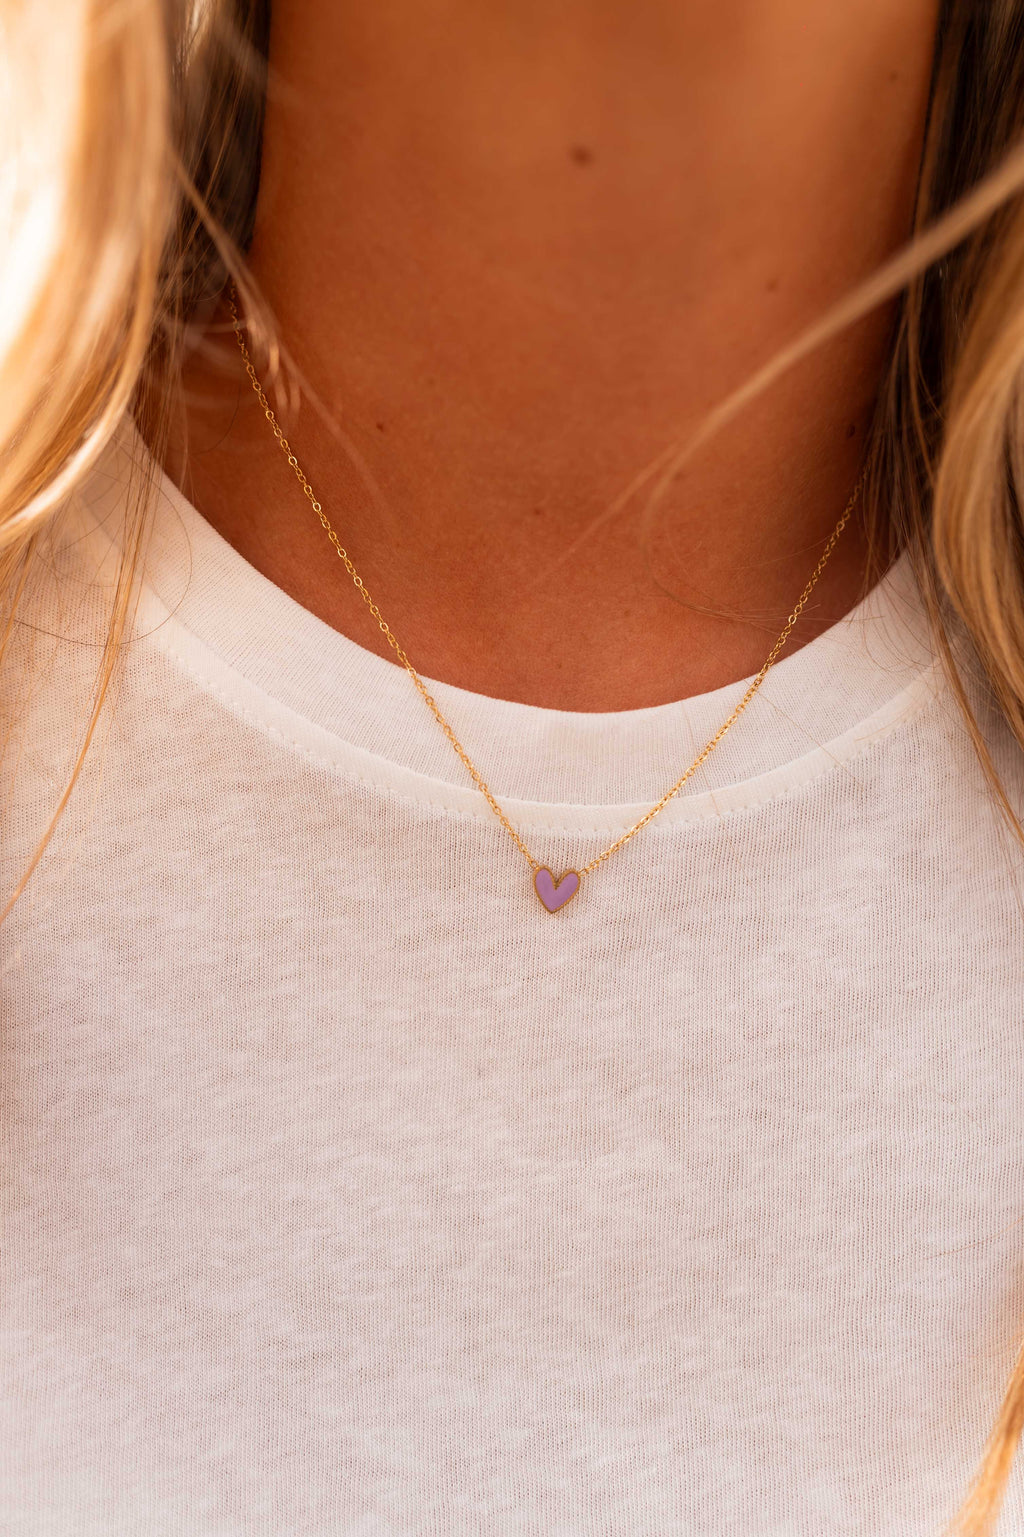 Blair necklace - purple